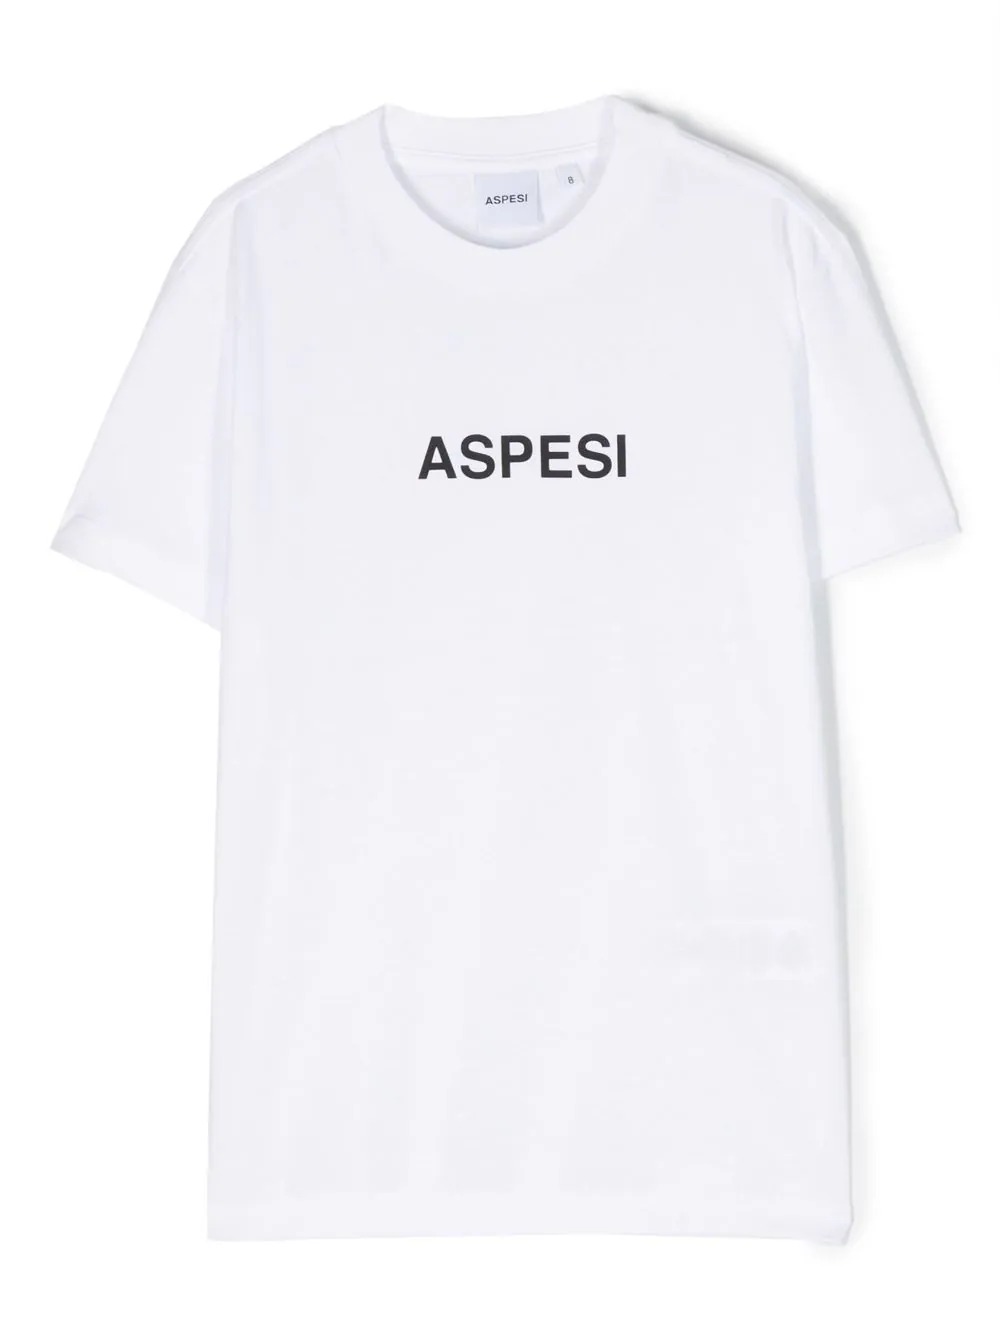 T-Shirt Bianca Con Logo - ASPESI KIDS - Russocapri